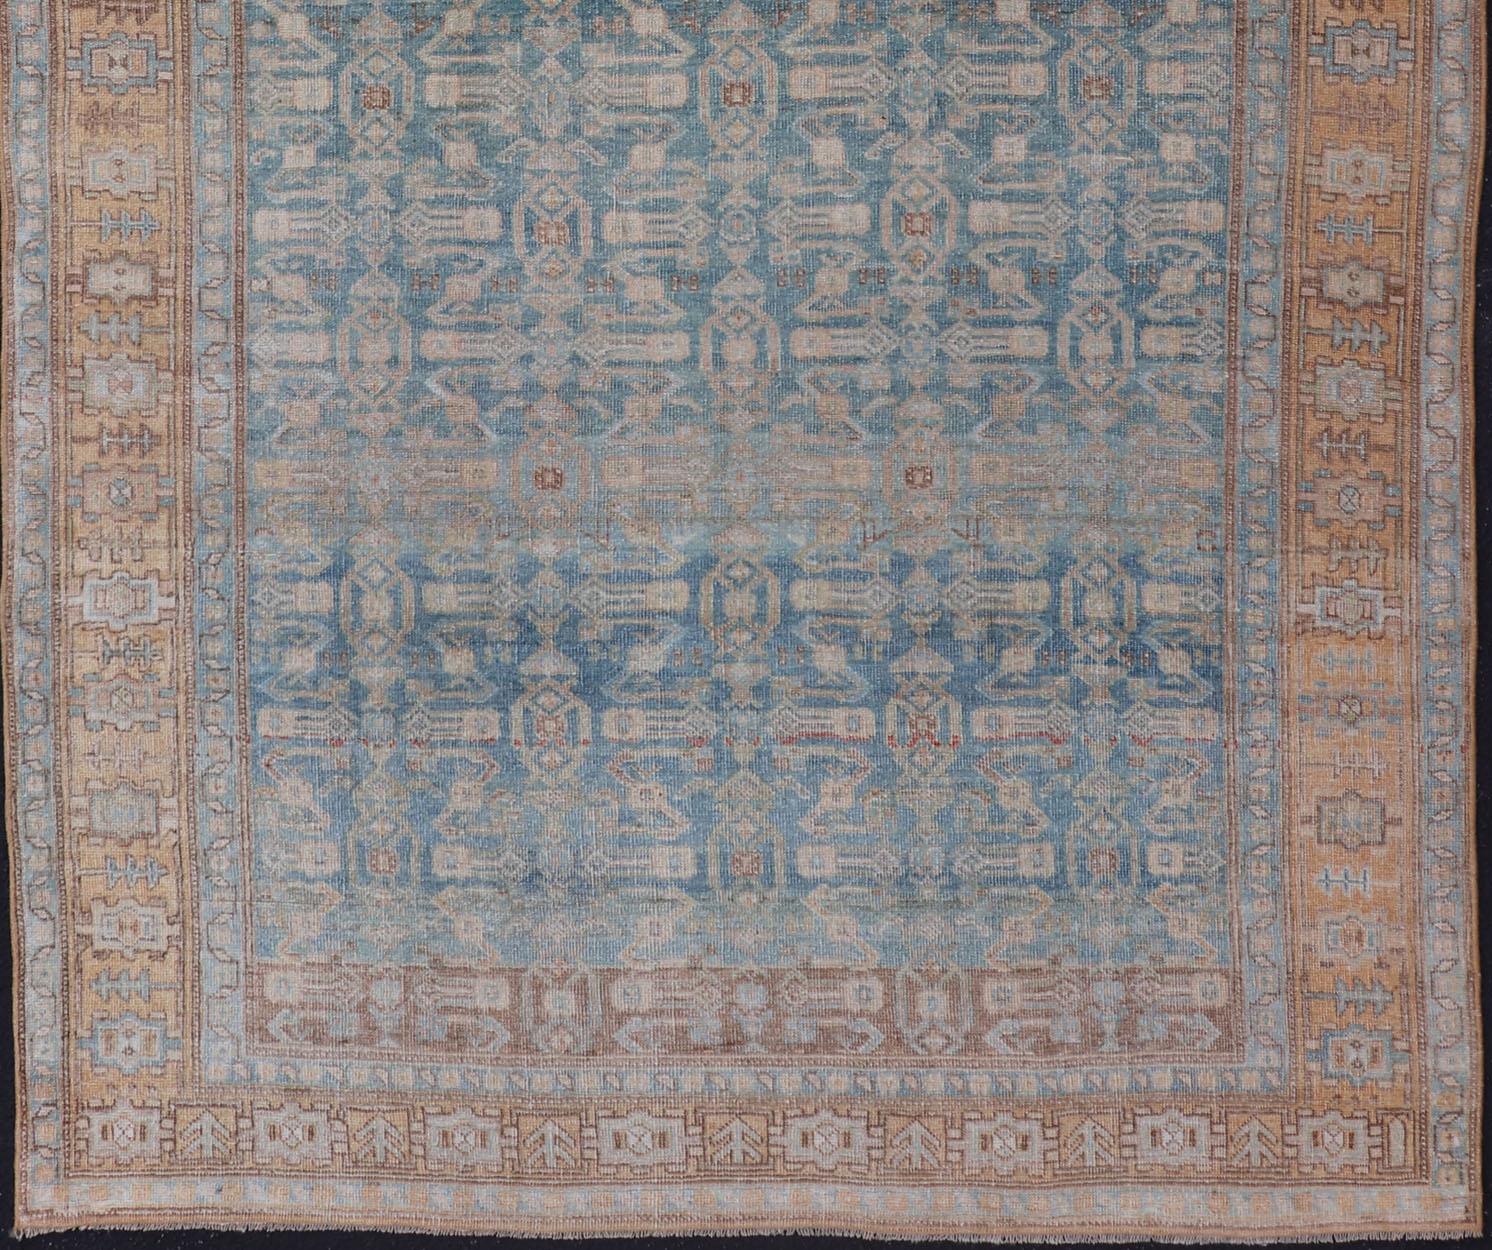 Antique Persian rug in light blue, cream, orange, brown and neutral tones with geometric motifs, Keivan Woven Arts / rug EMB-9565-P13858, country of origin / type: Iran / Bijar, circa 1910.

This Persian Bidjar carpet from 1910 is characterized by